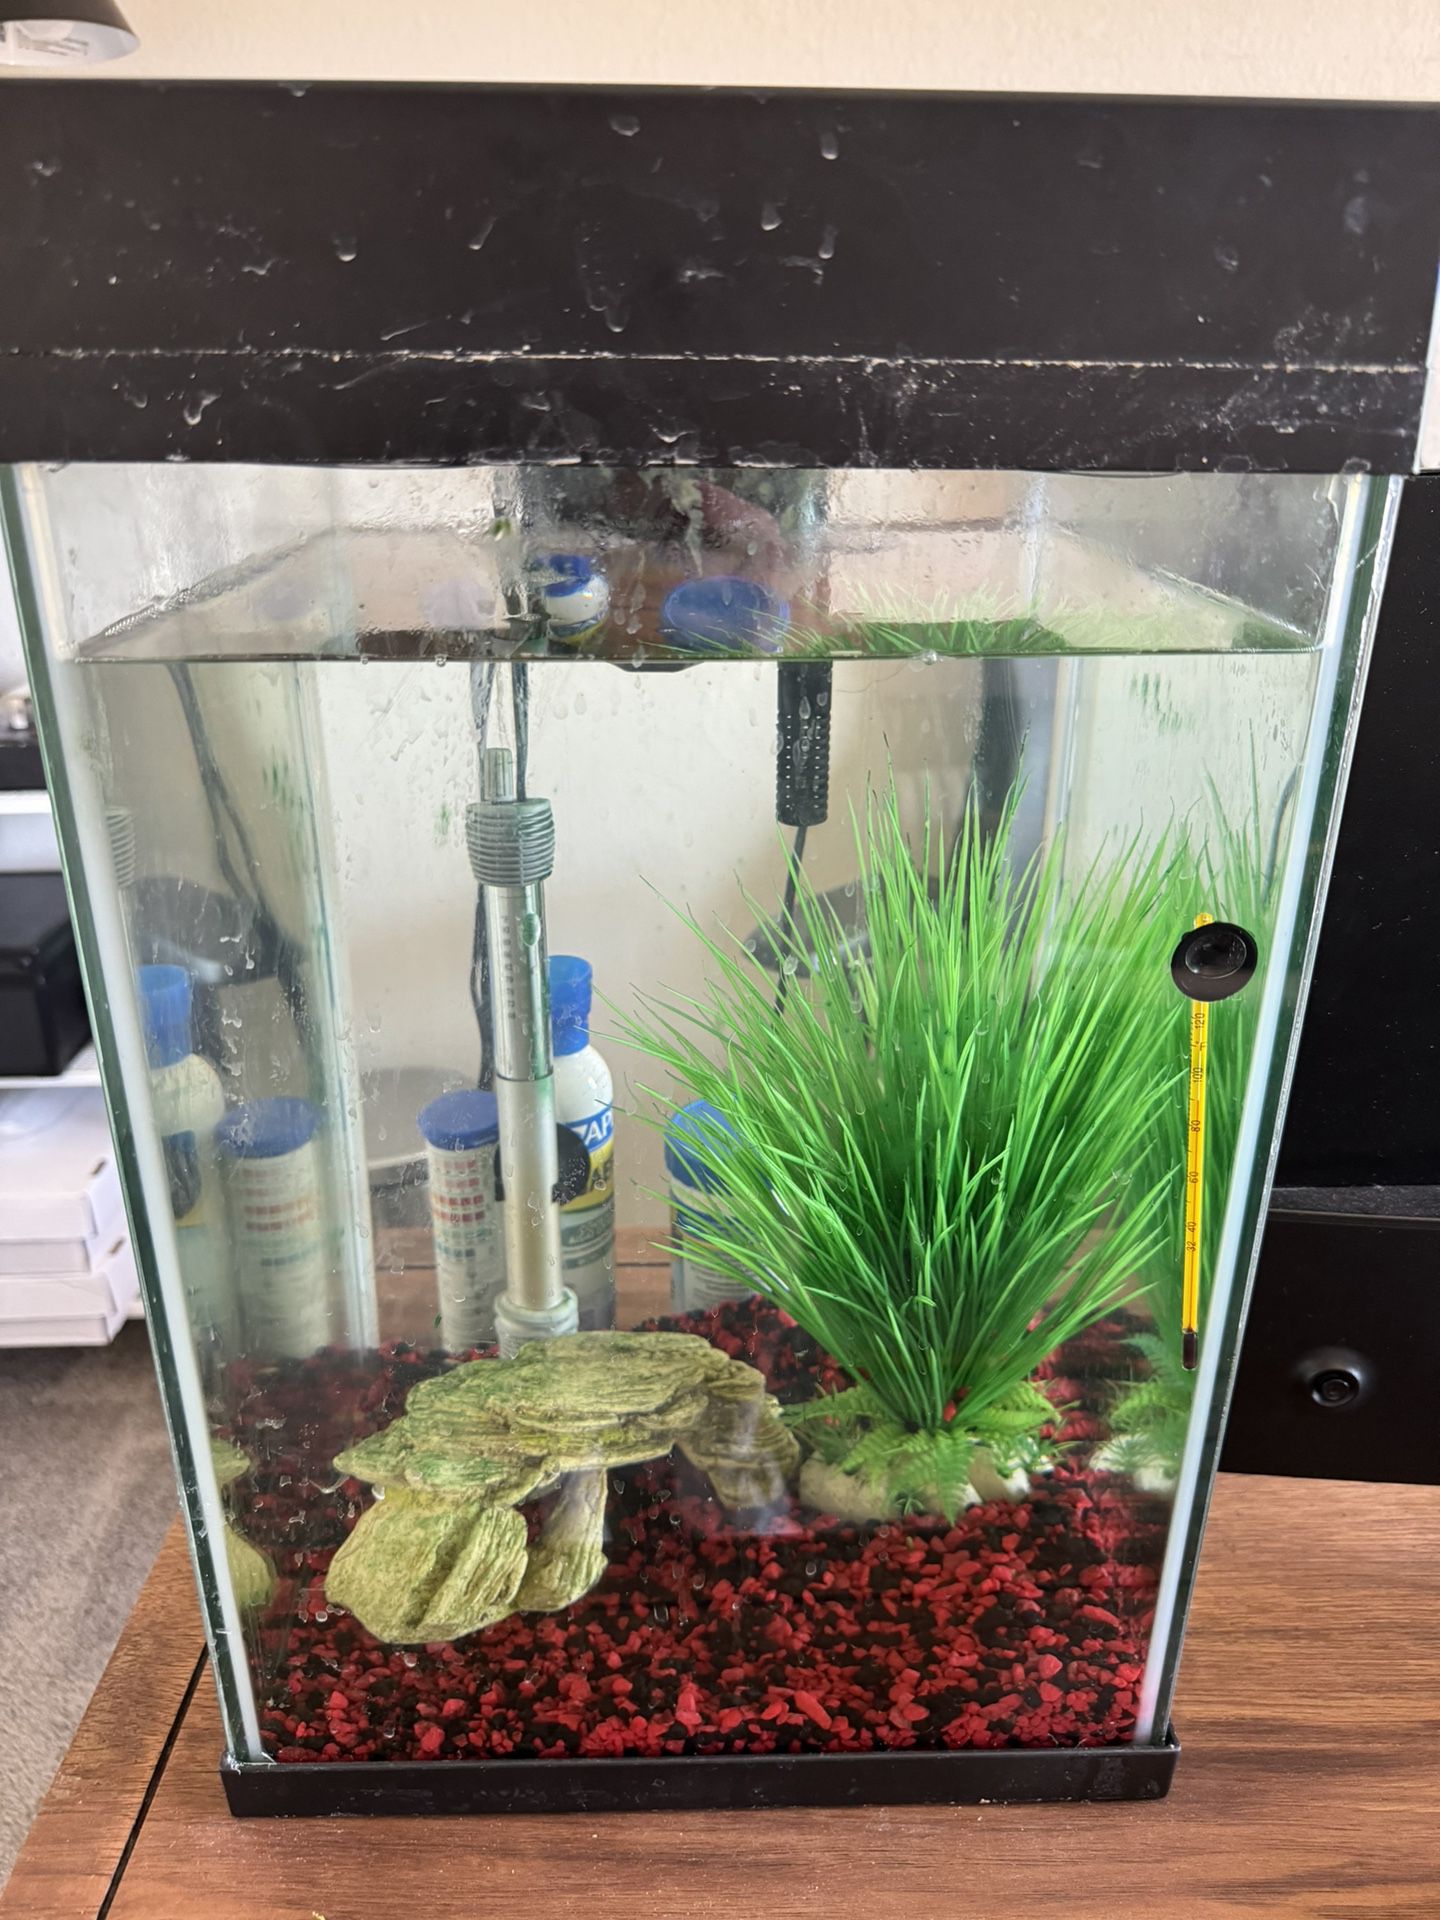 10 gallon fish tank aquarium and accessories (please read description!)